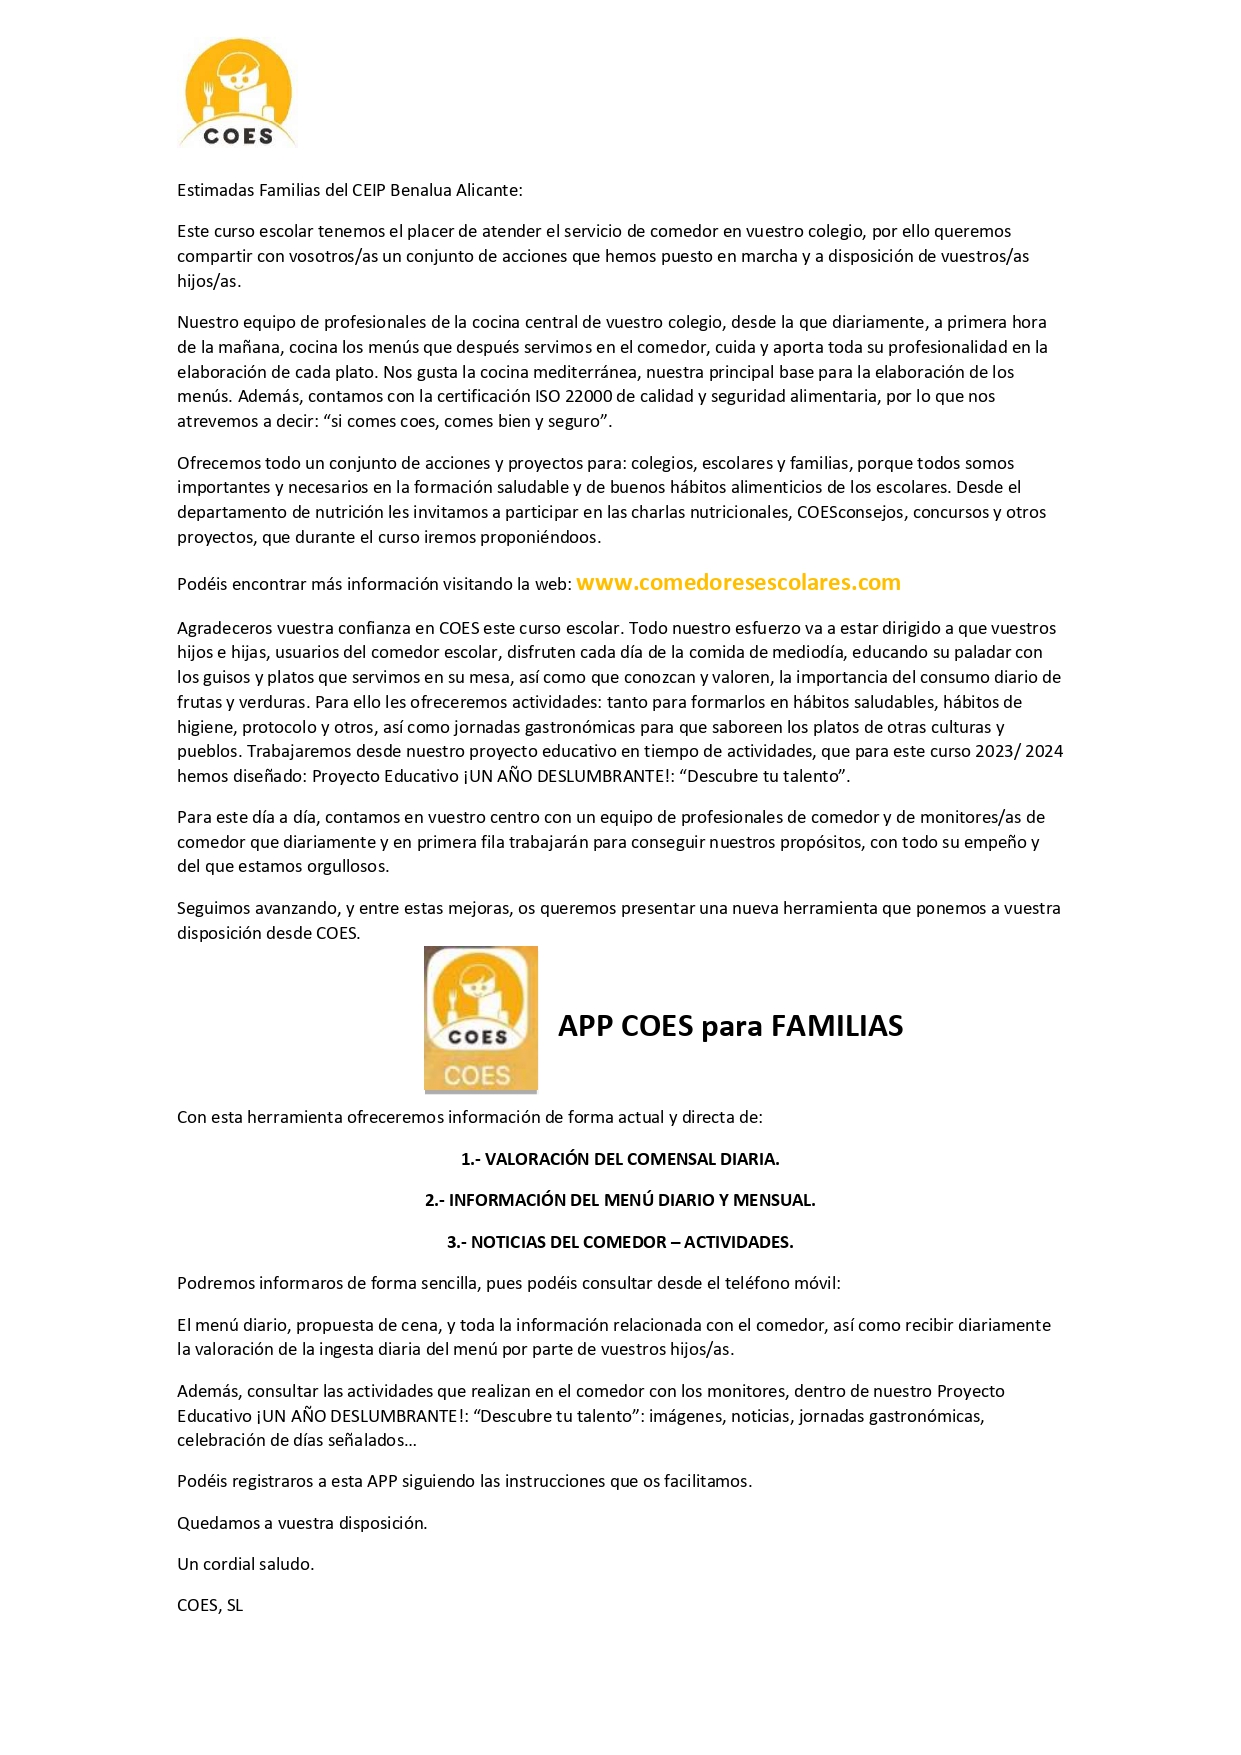 Presentación APP COES FAMILIAS Benalua Alicante_page-0001